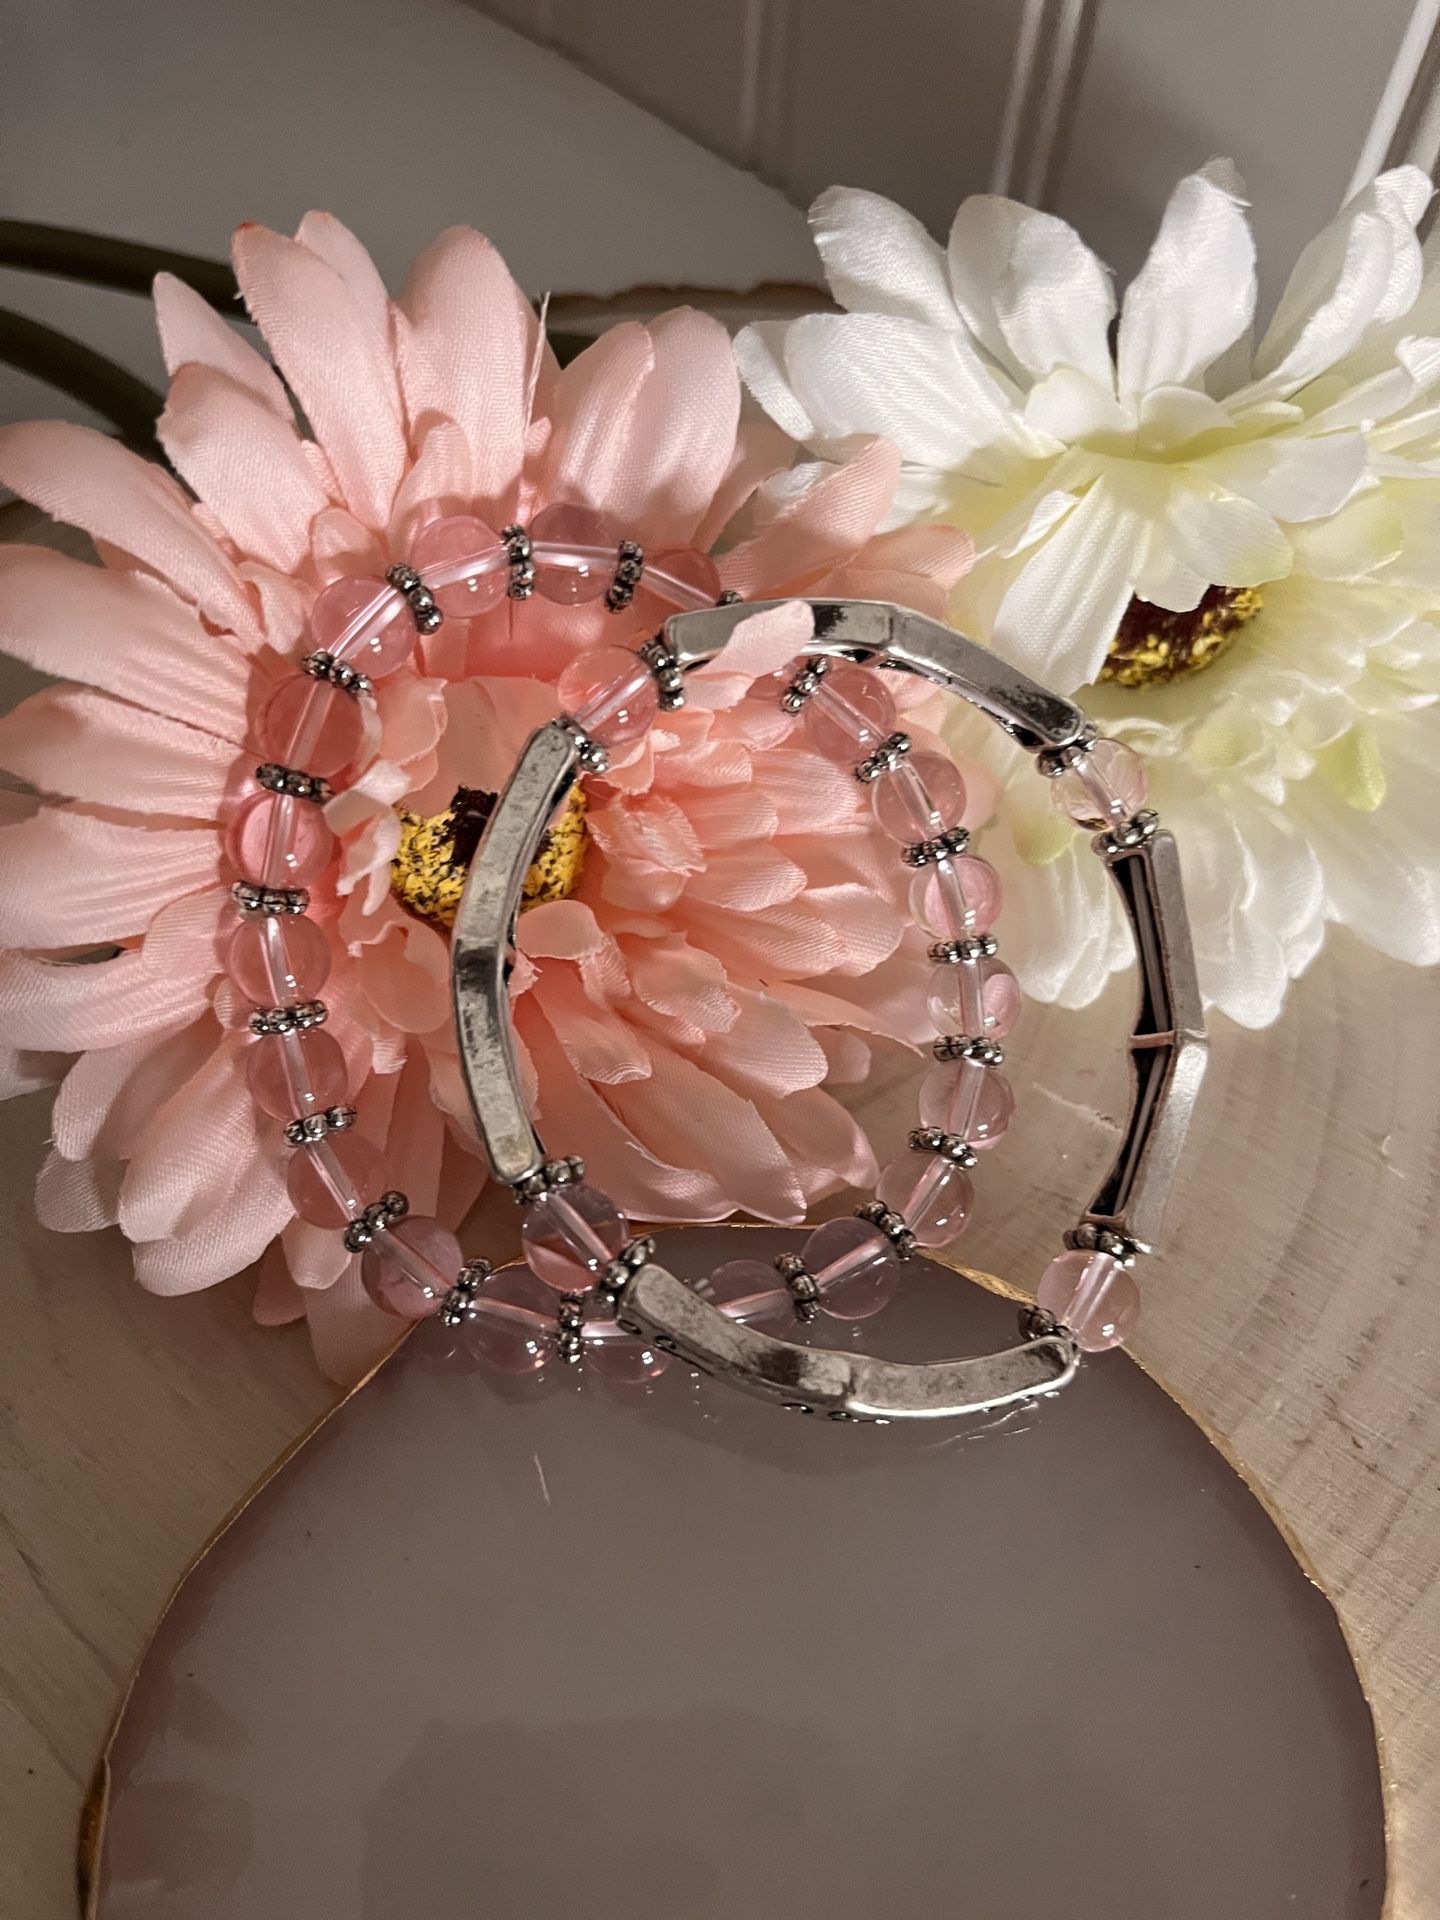 Absolutely Stunning Fabulous Pink & Silver Bracelet 